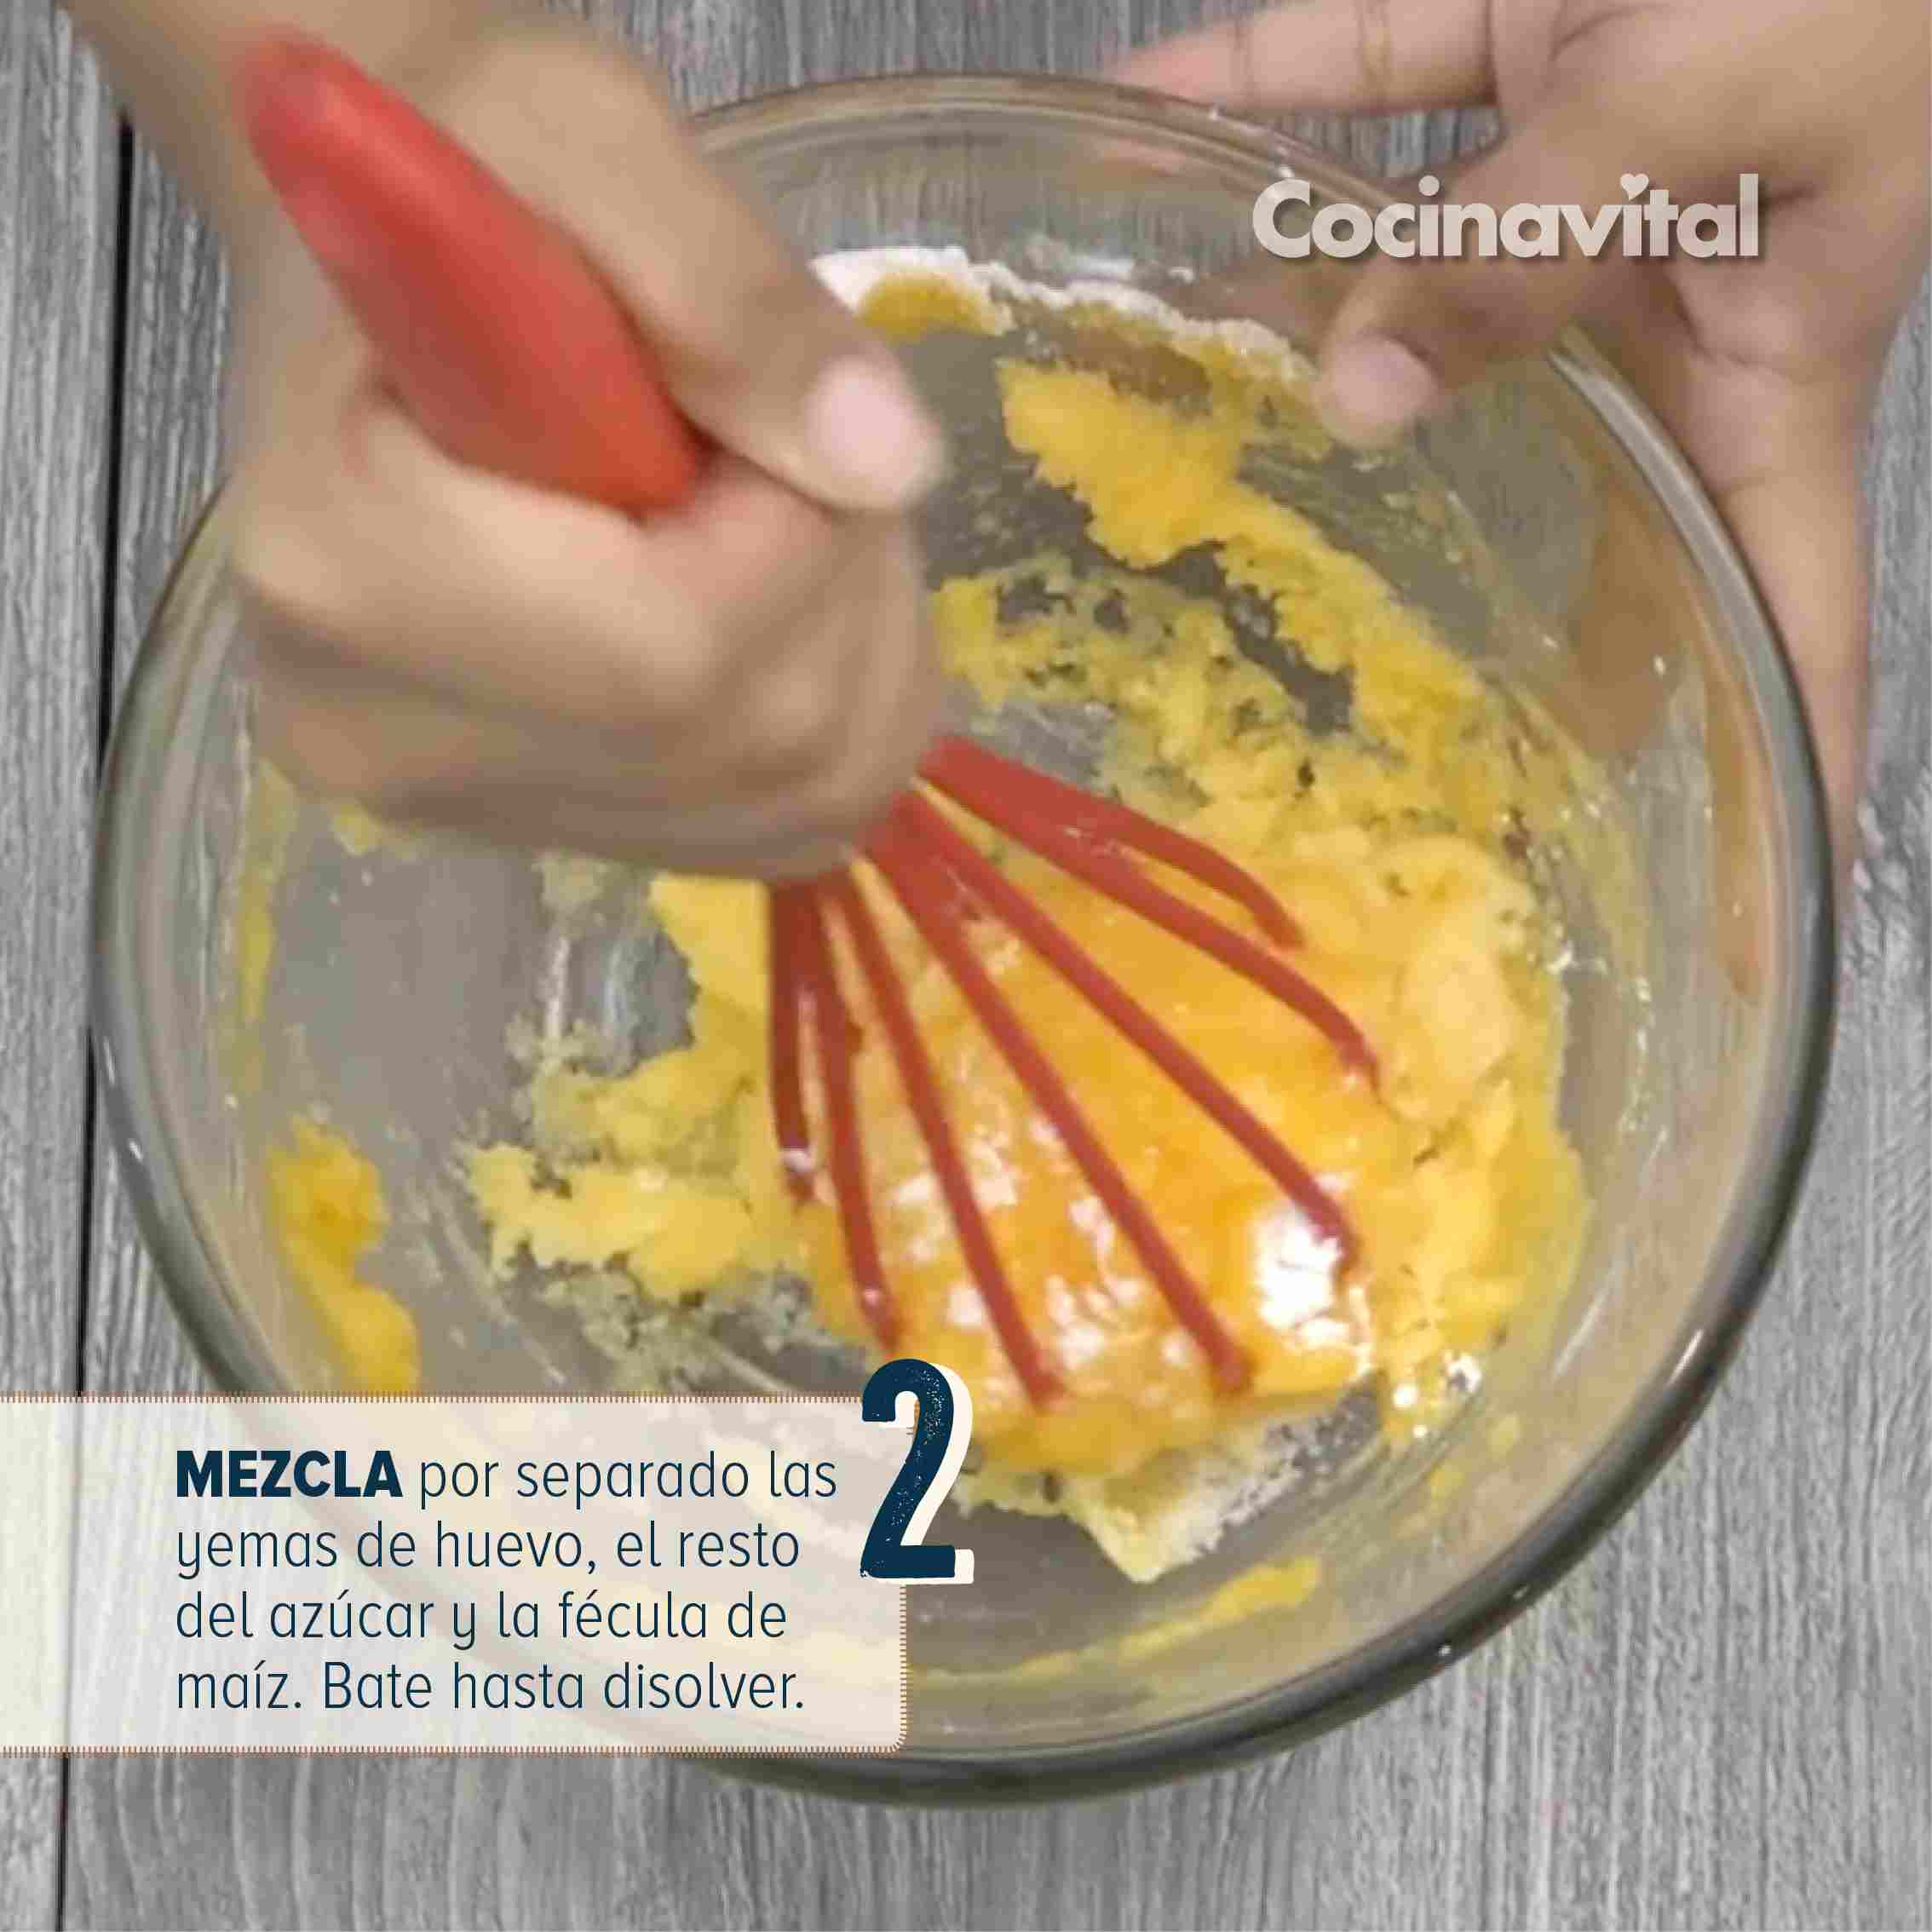 Mezcla las yemas de huevo por separado